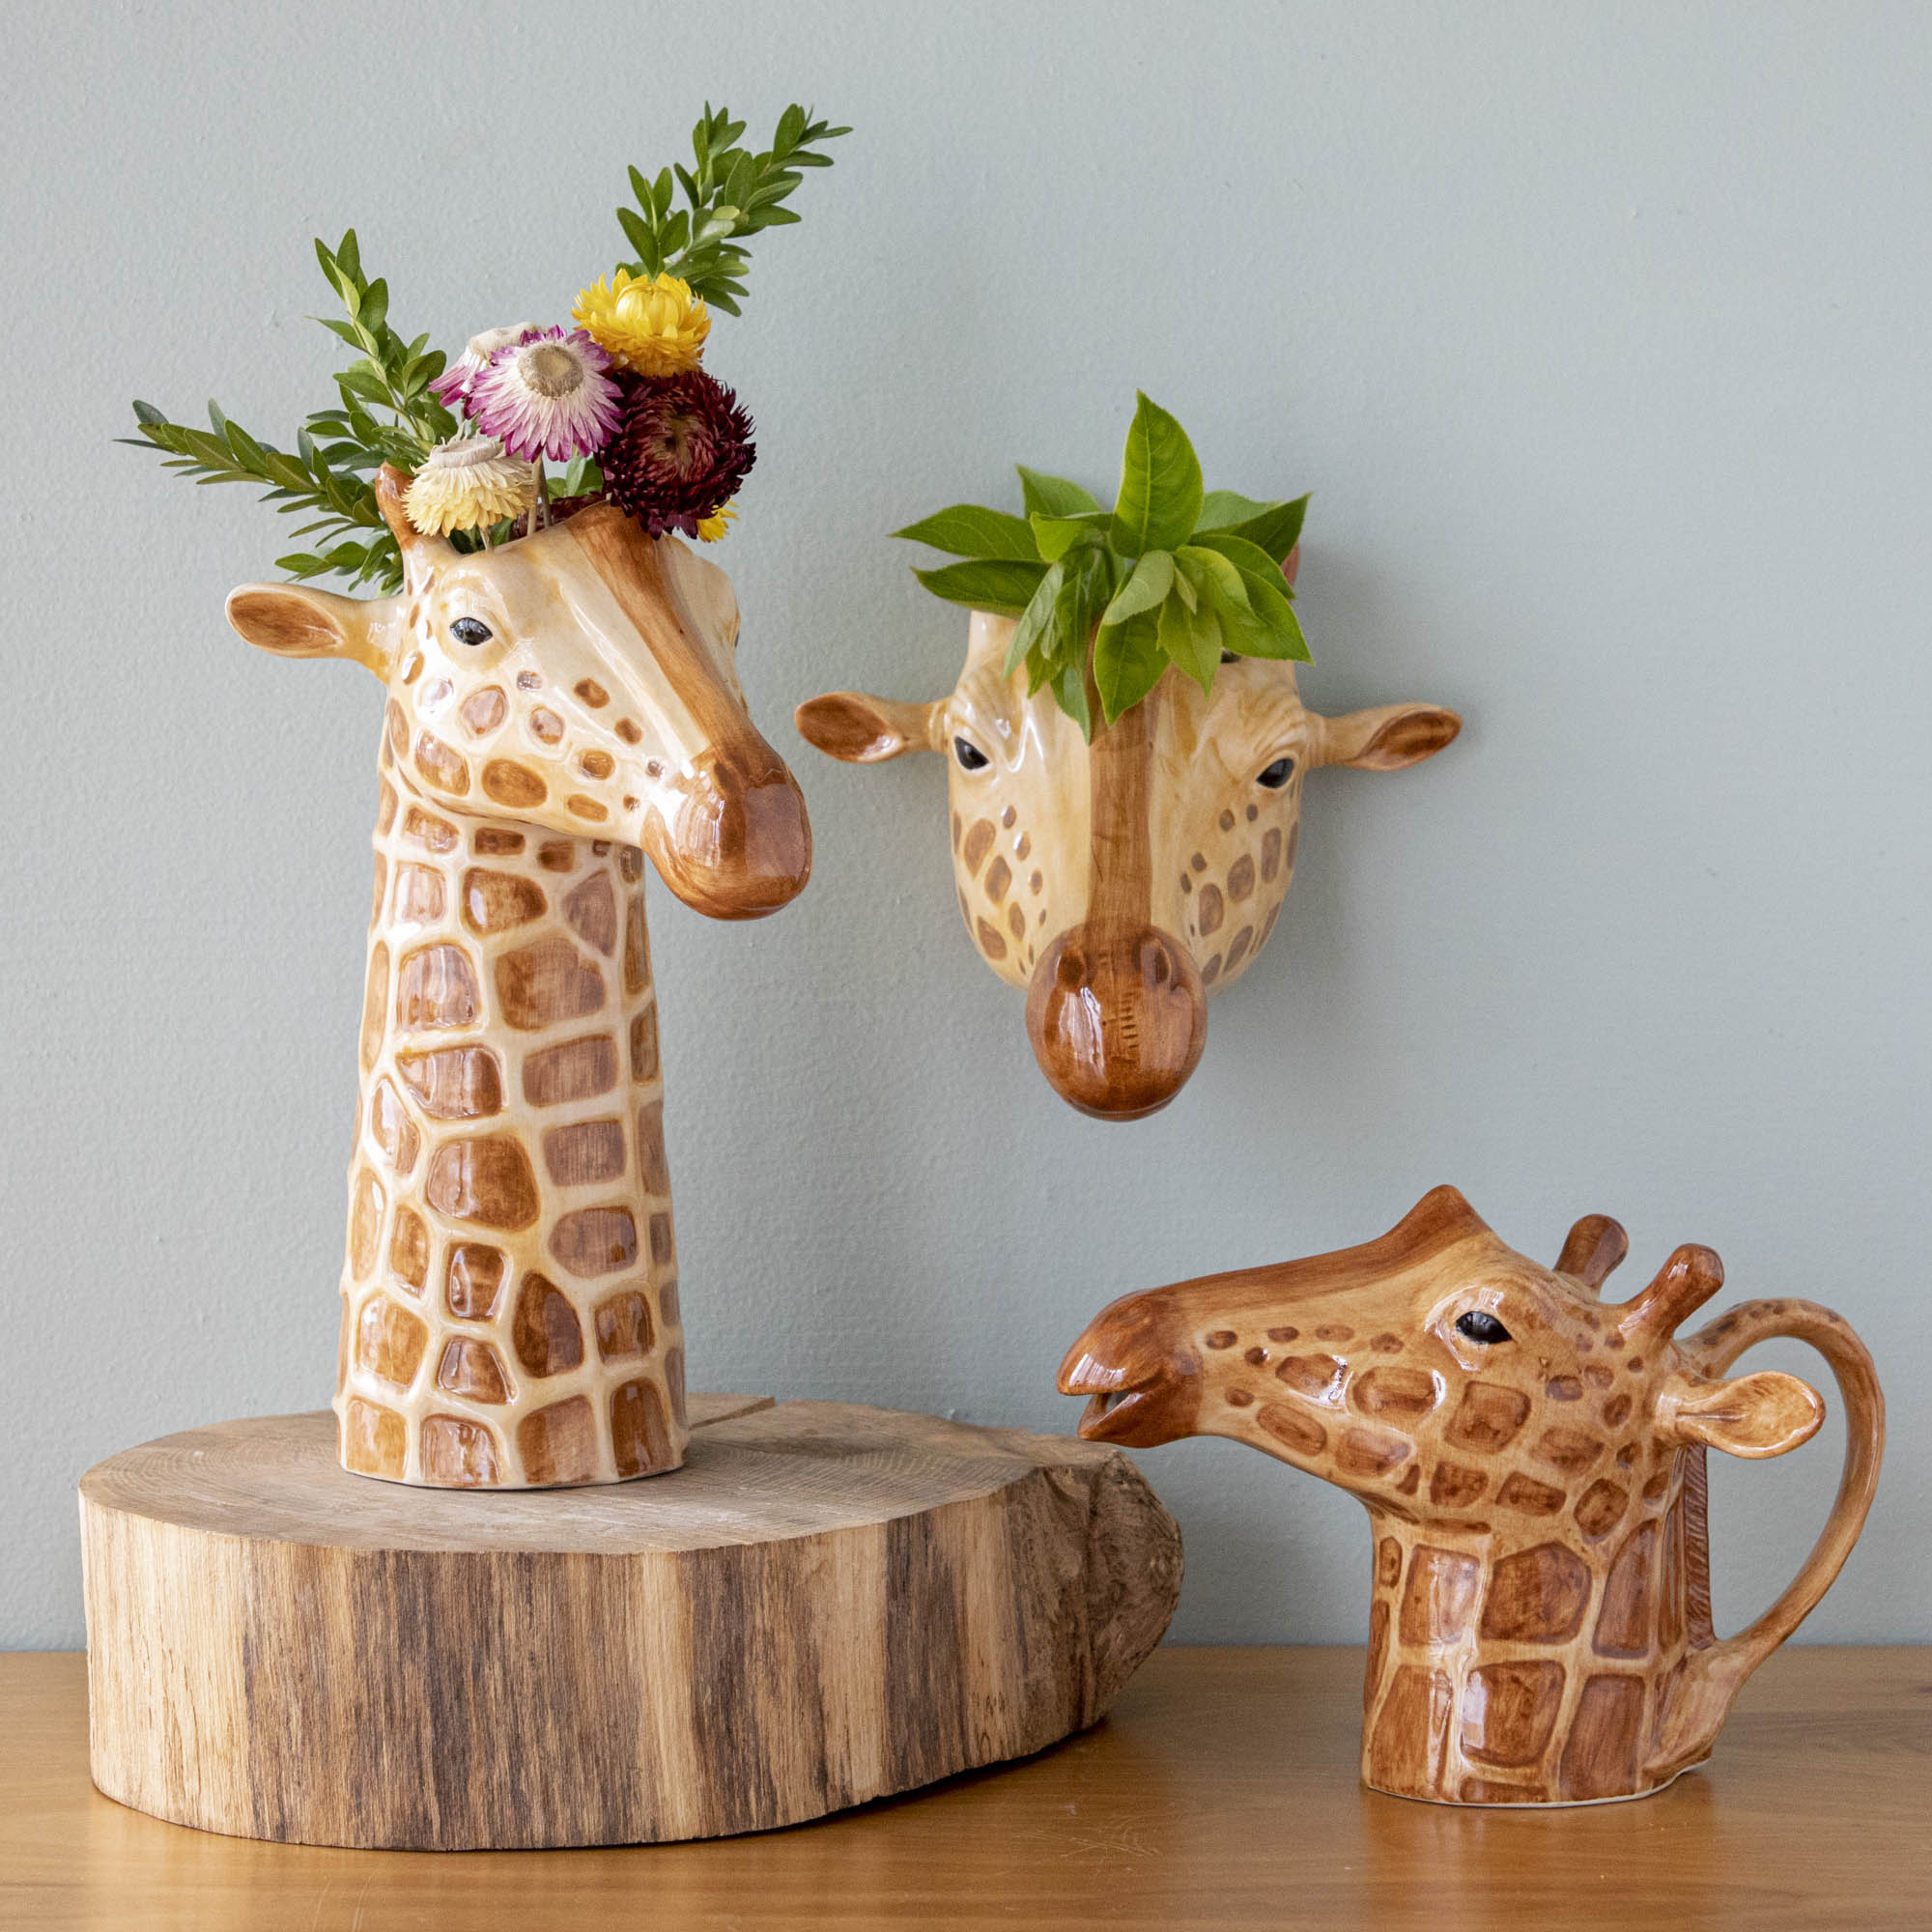 Three Quail Ceramic giraffe vases with flowers in them, created by the British brand Quail Ceramics.